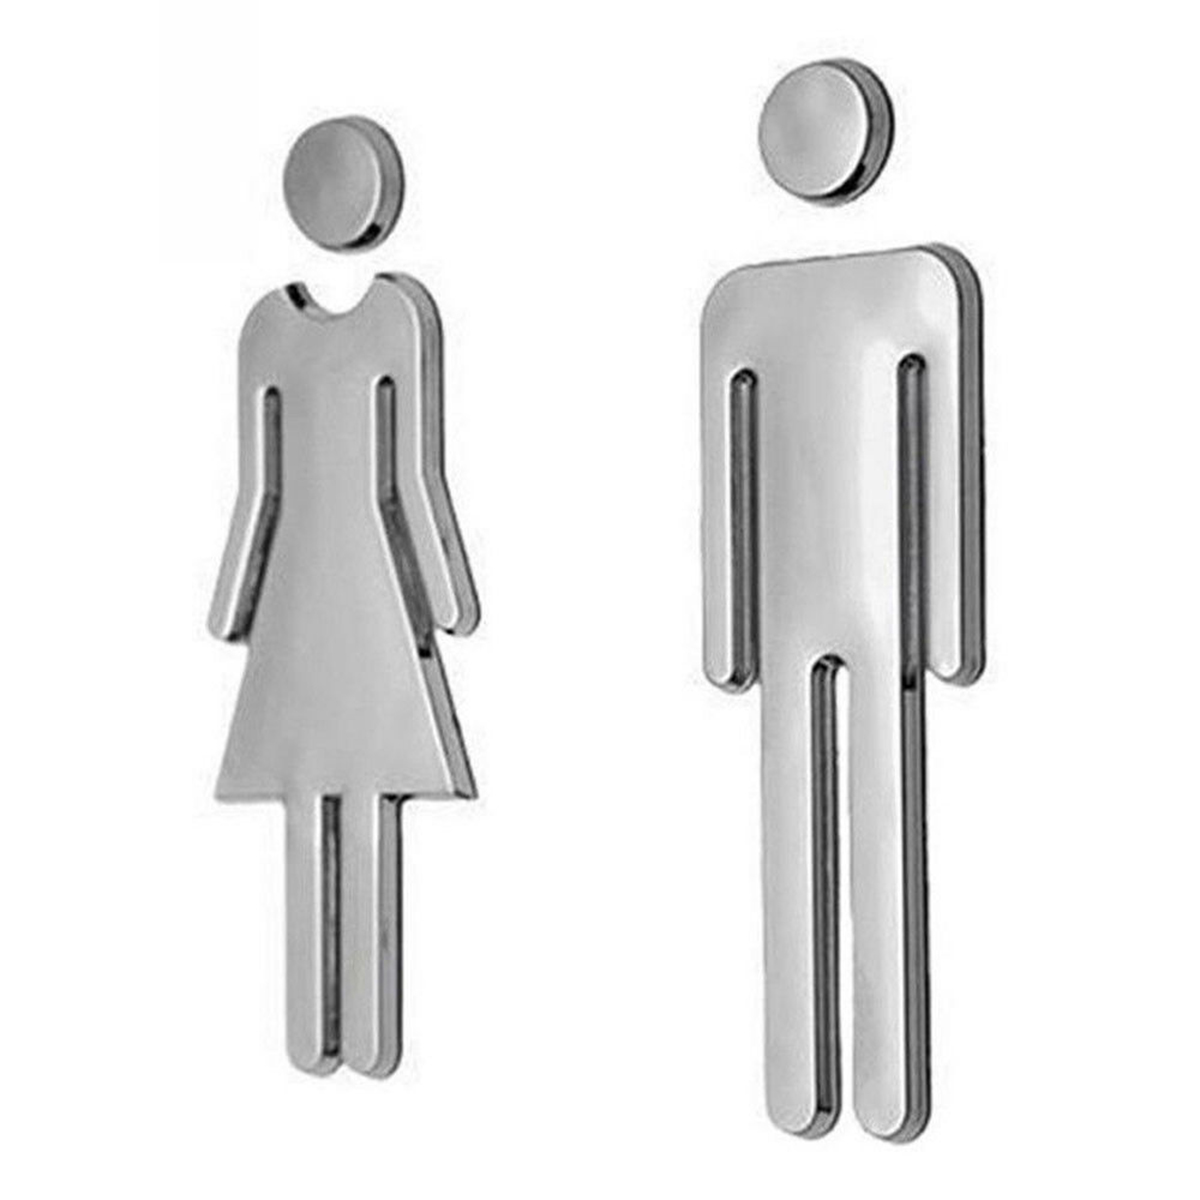 Sticker WC Toilet Door Entrance Sign Men Women Bathroom DIY Wall YW | eBay Man And Woman Bathroom Symbol